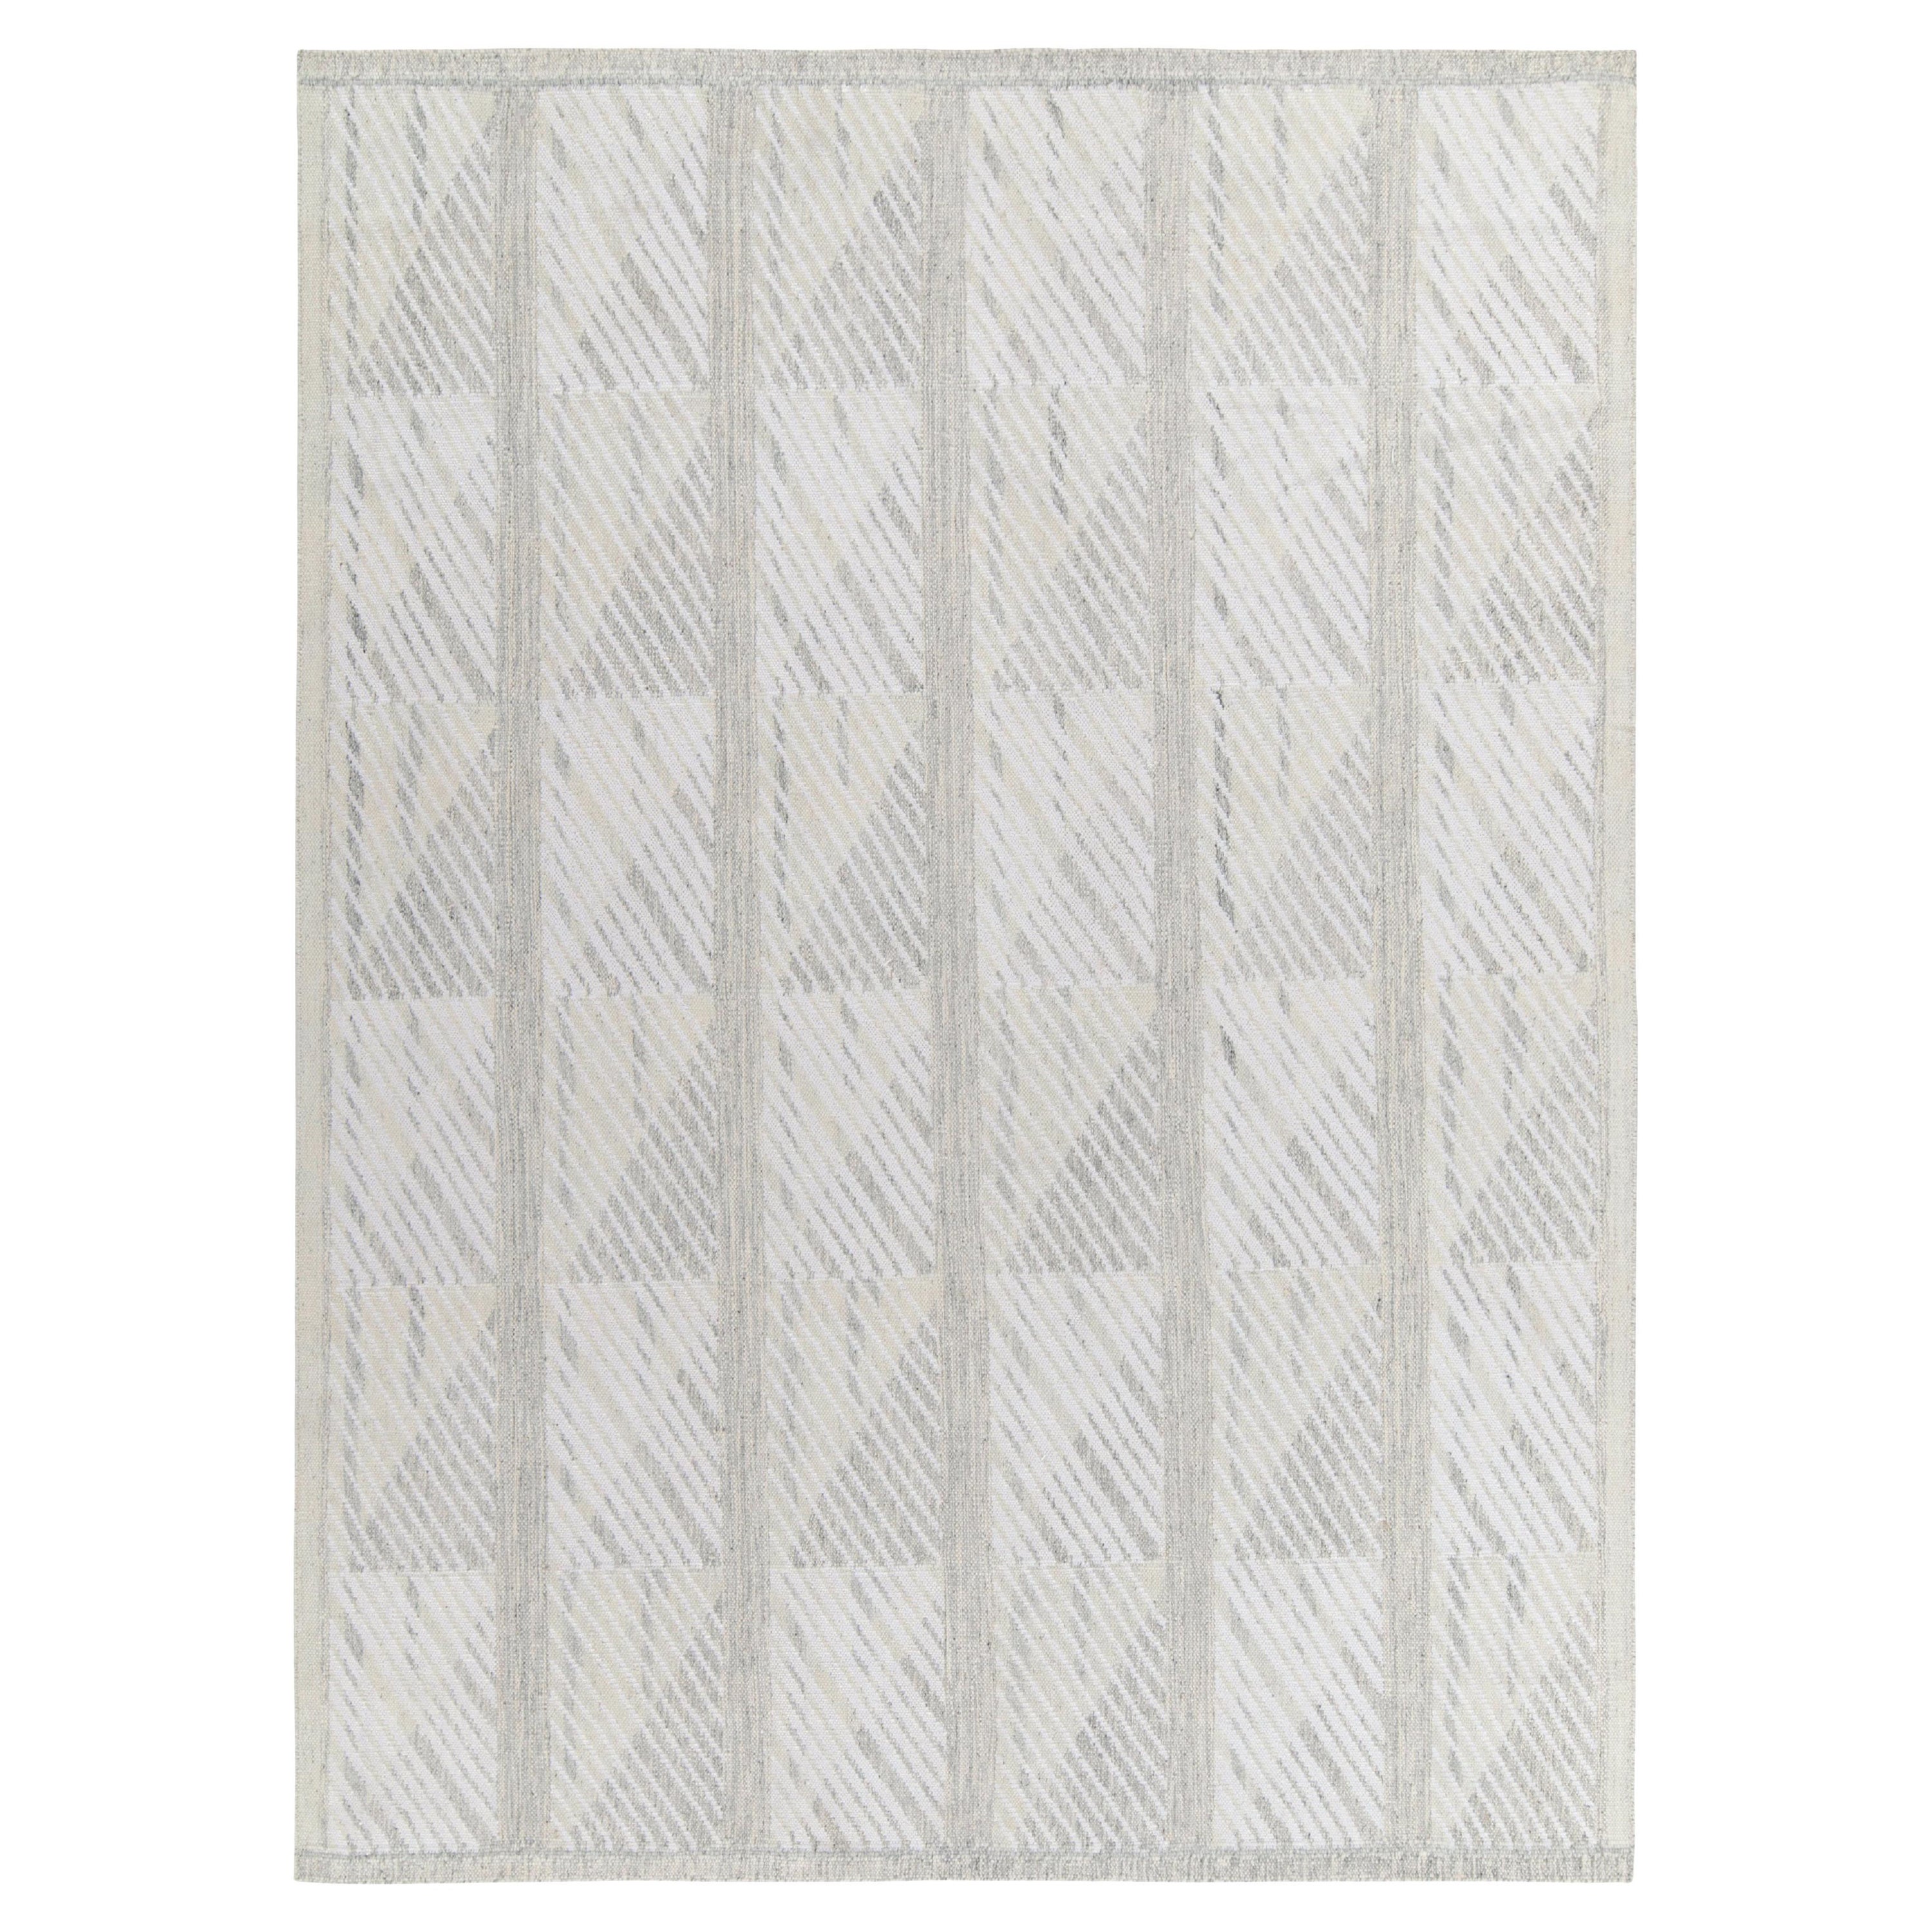 Rug & Kilim's Scandinavian Style Kilim Rug in Gray, White Geometric Pattern